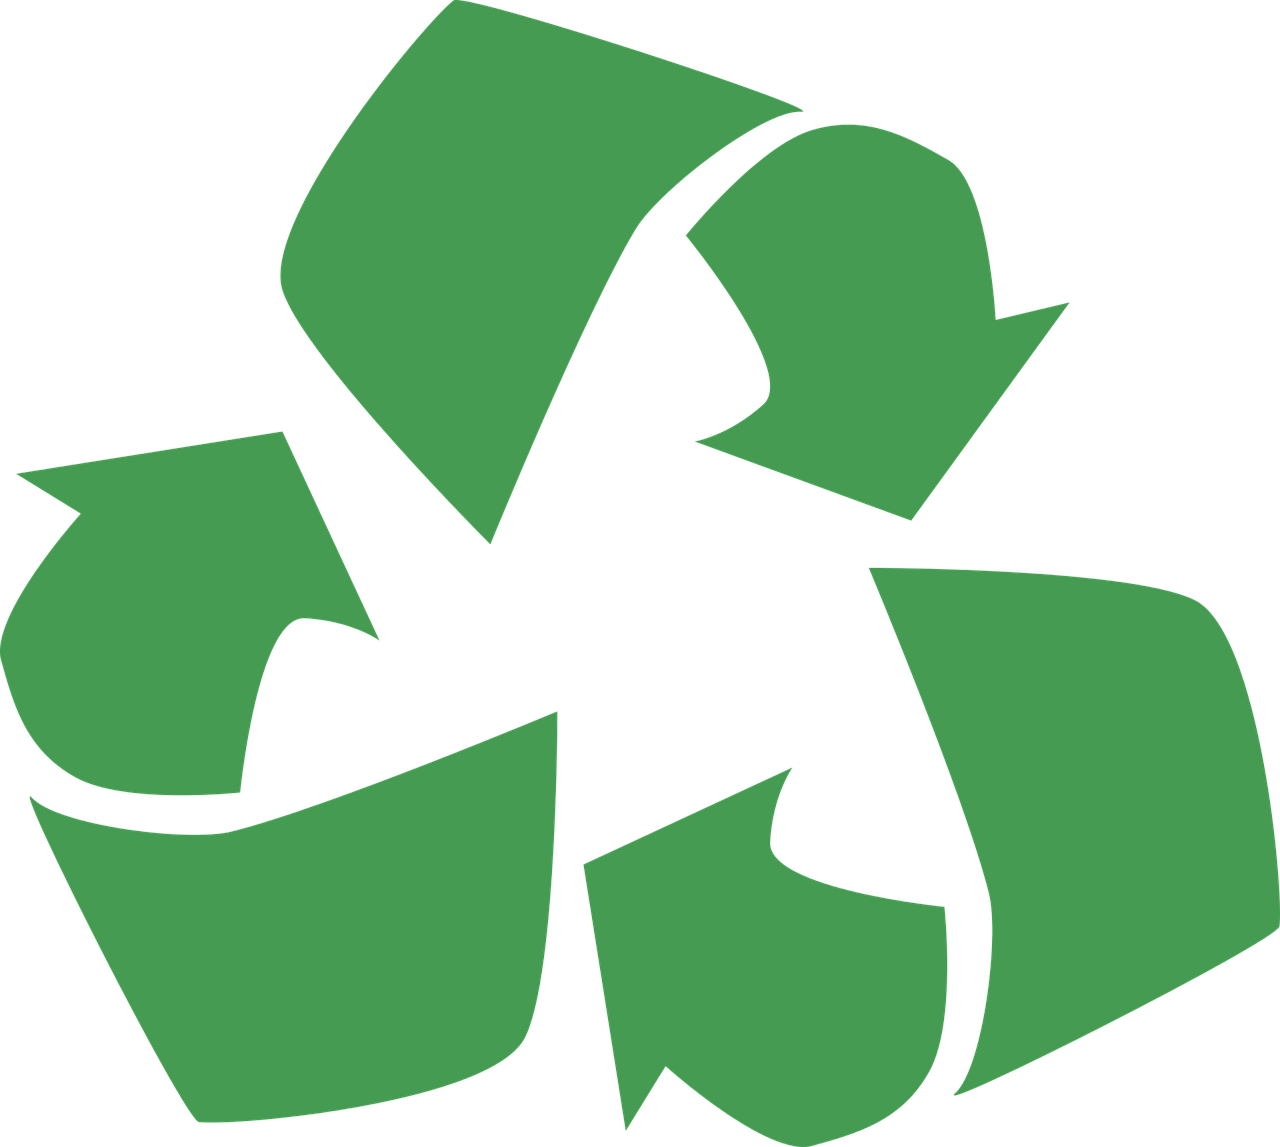 republic-recycling-presentation-summary-parkway-ucc